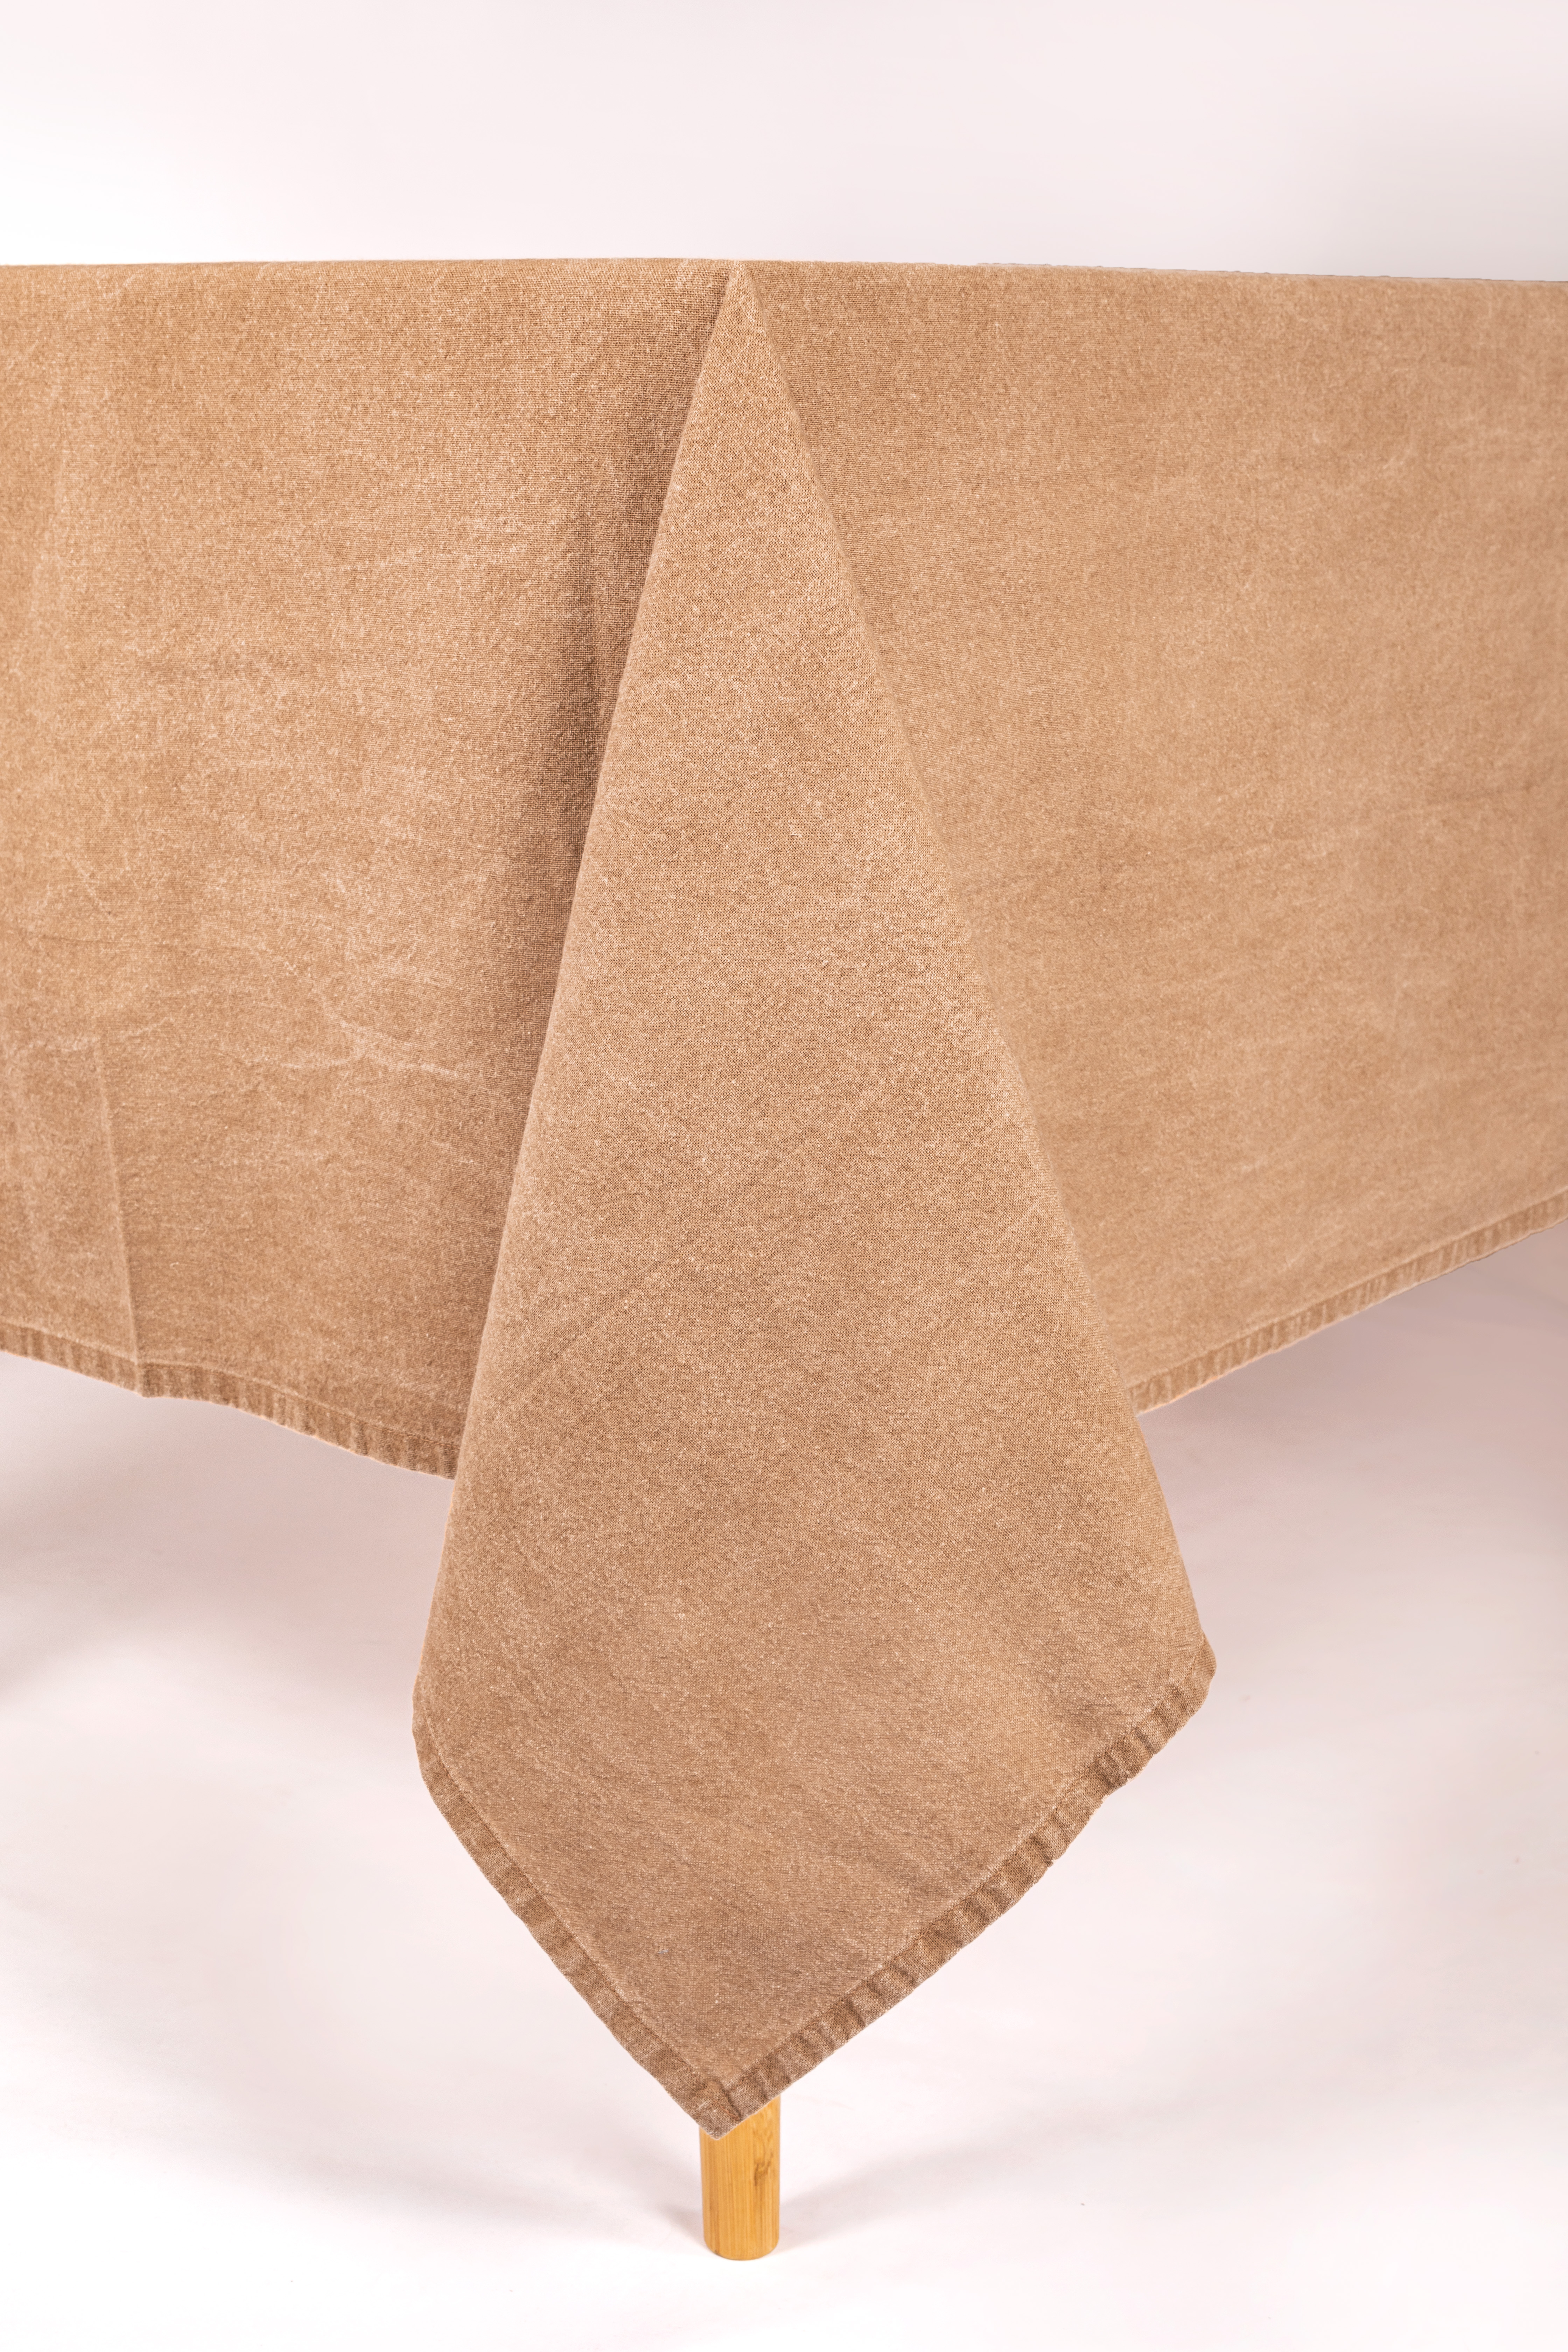 Table cloth MYRNA 145x250cm - indian tan